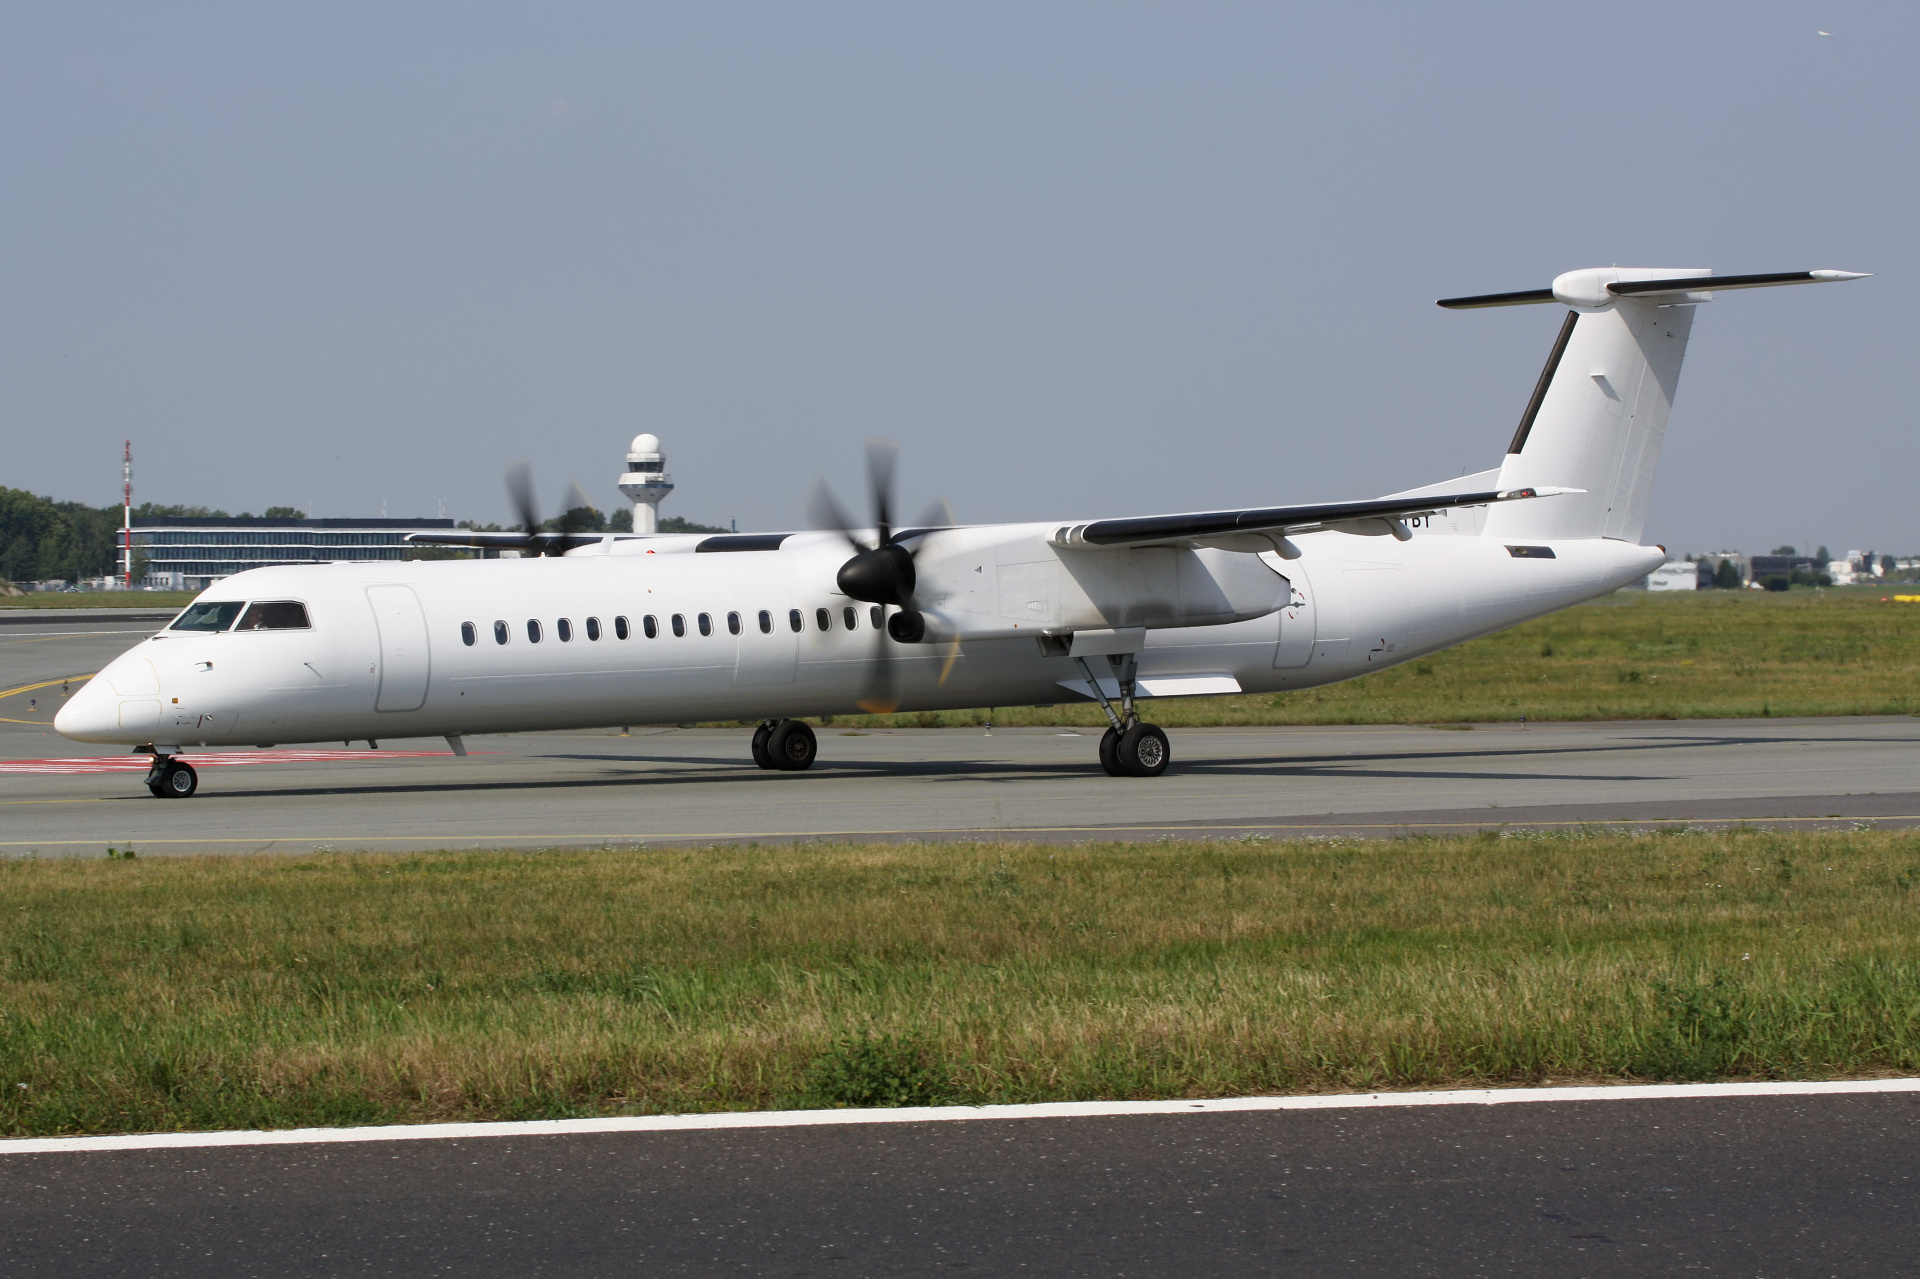 OY-YBY (no livery) (Aircraft » EPWA Spotting » De Havilland Canada DHC-8 Dash 8 » LOT Polish Airlines)